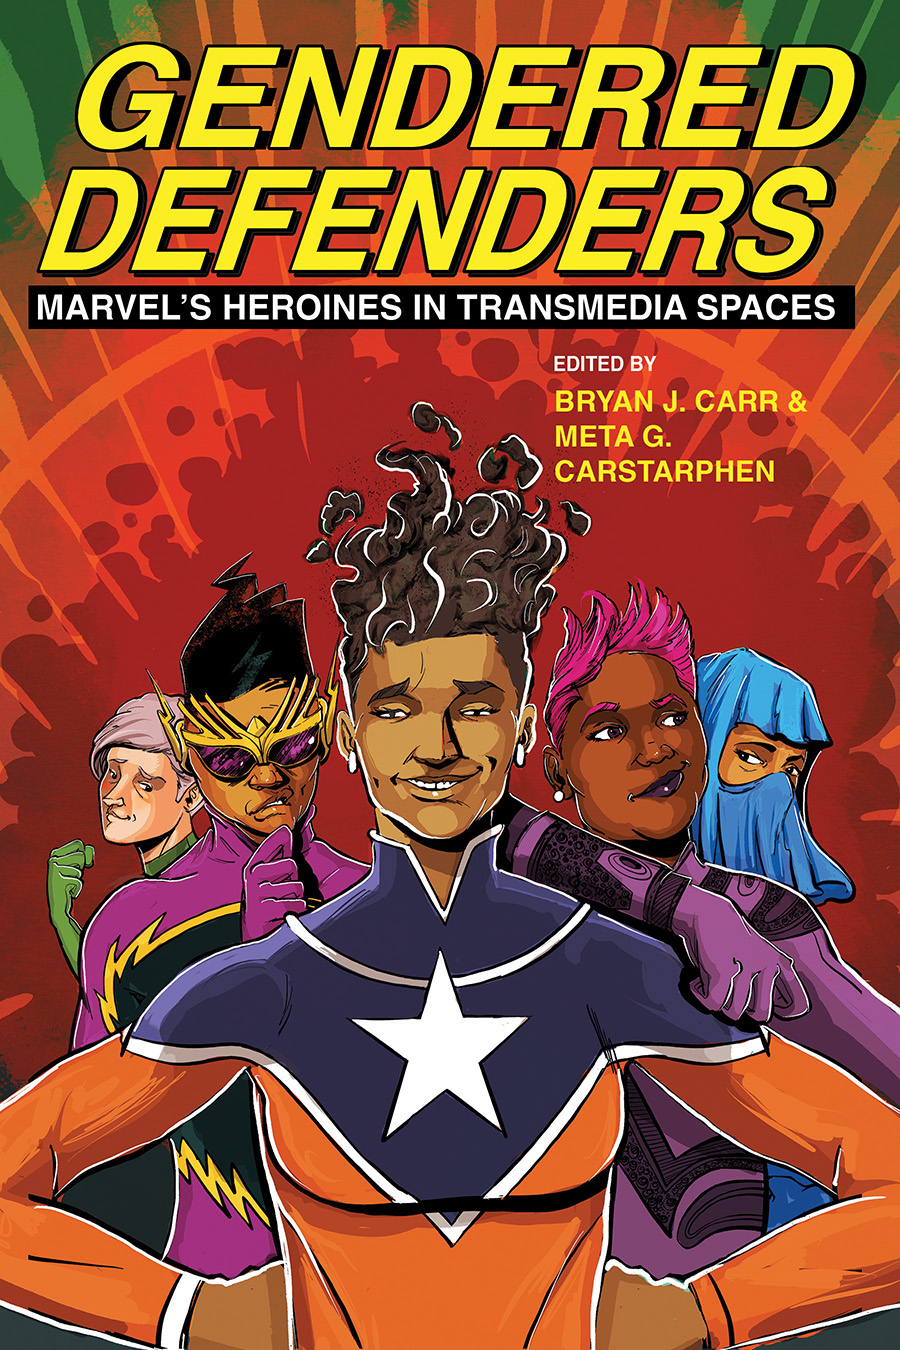 Gendered Defendersbook cover